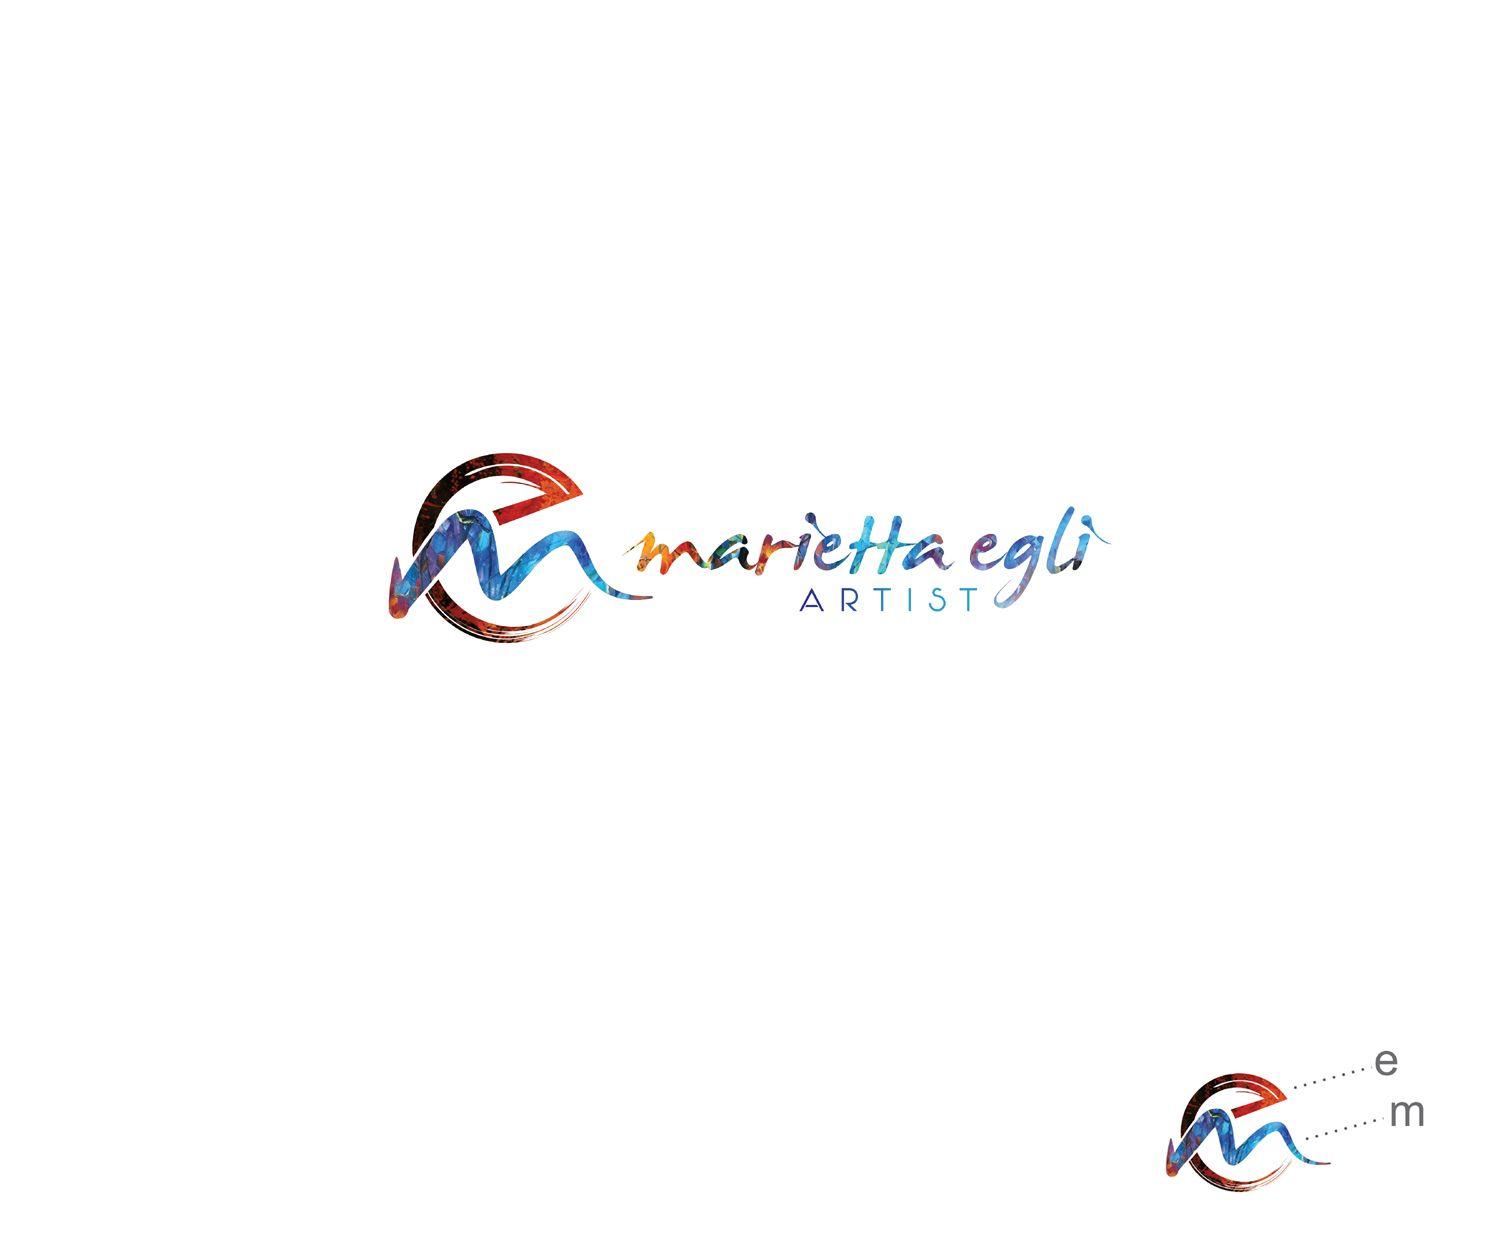 Marietta Company Logo - Modern, Playful Logo Design for Marietta Egli